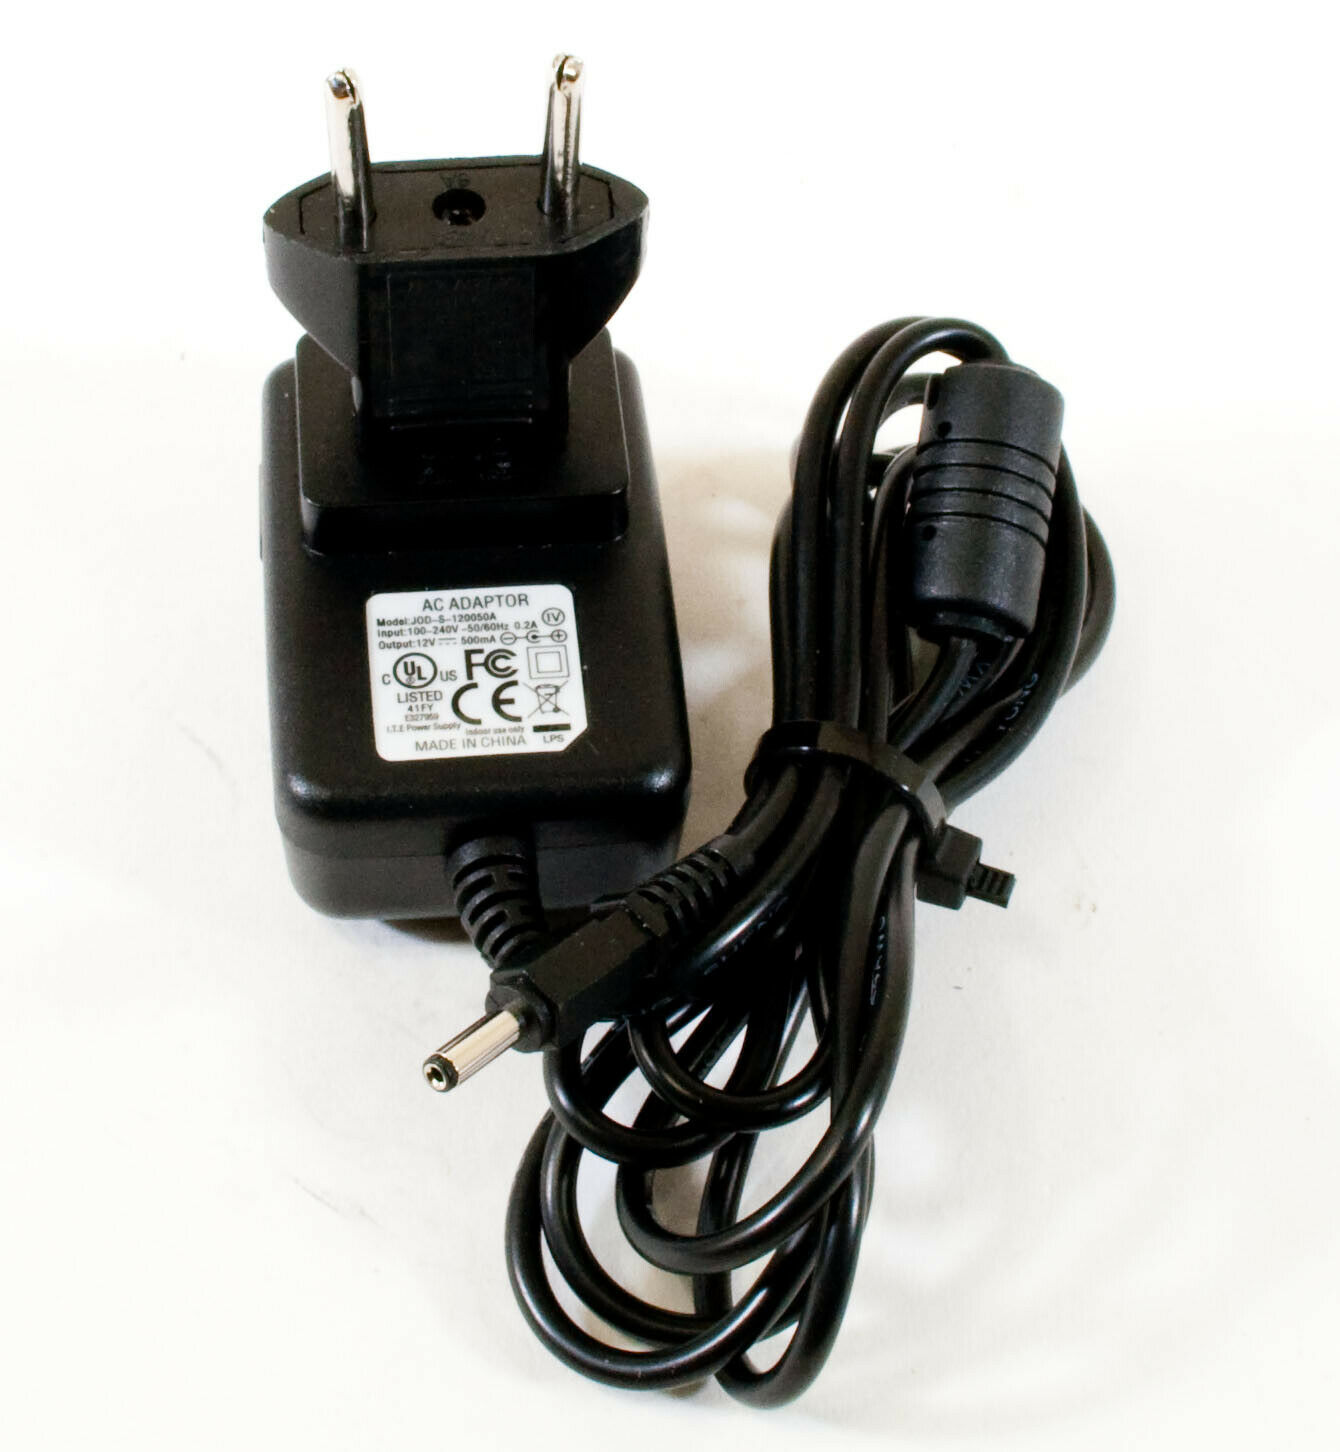 JOD-S-120050A AC Adapter 12V 500mA Original I.T.E. Power Supply Output Current: 500 mA Type: Power